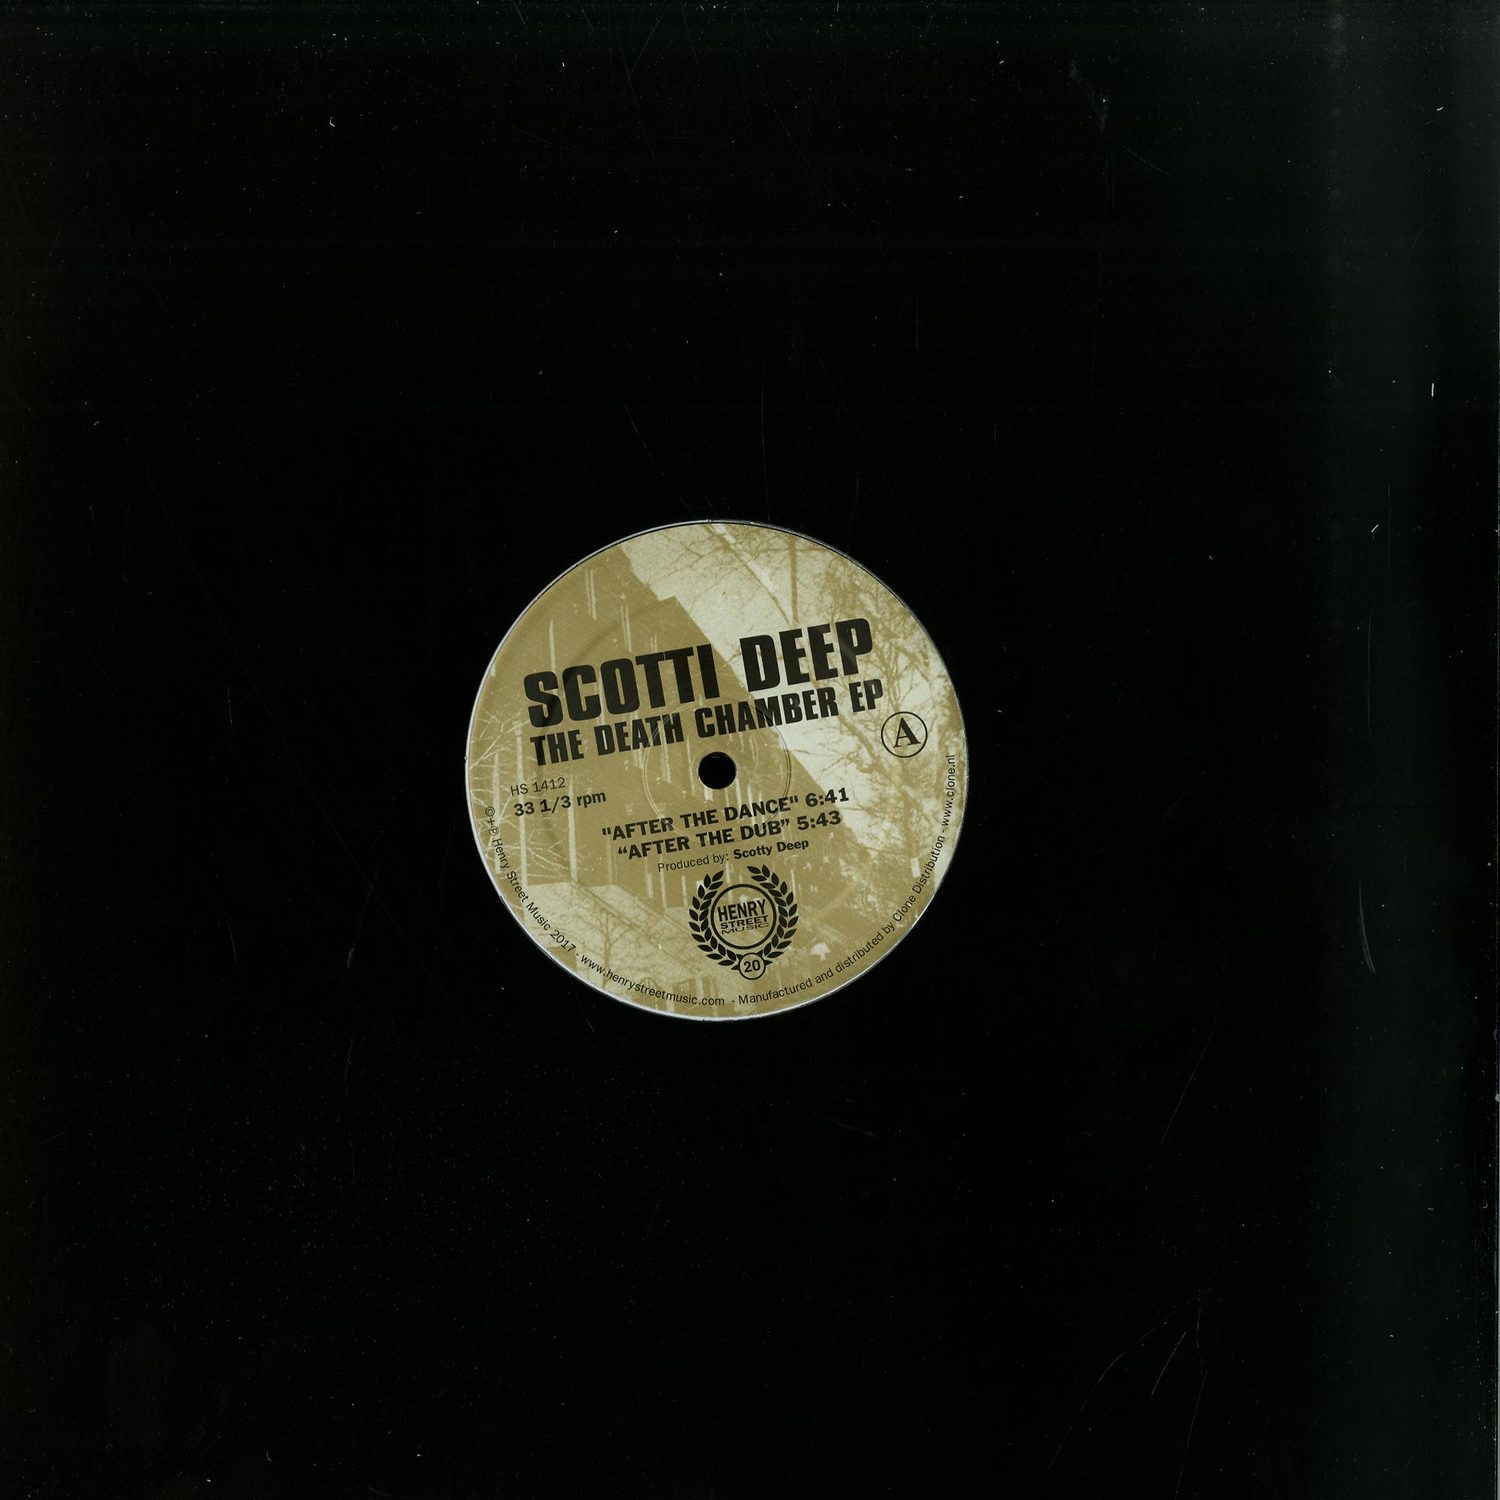 Scotti Deep - THE DEATH CHAMBER EP